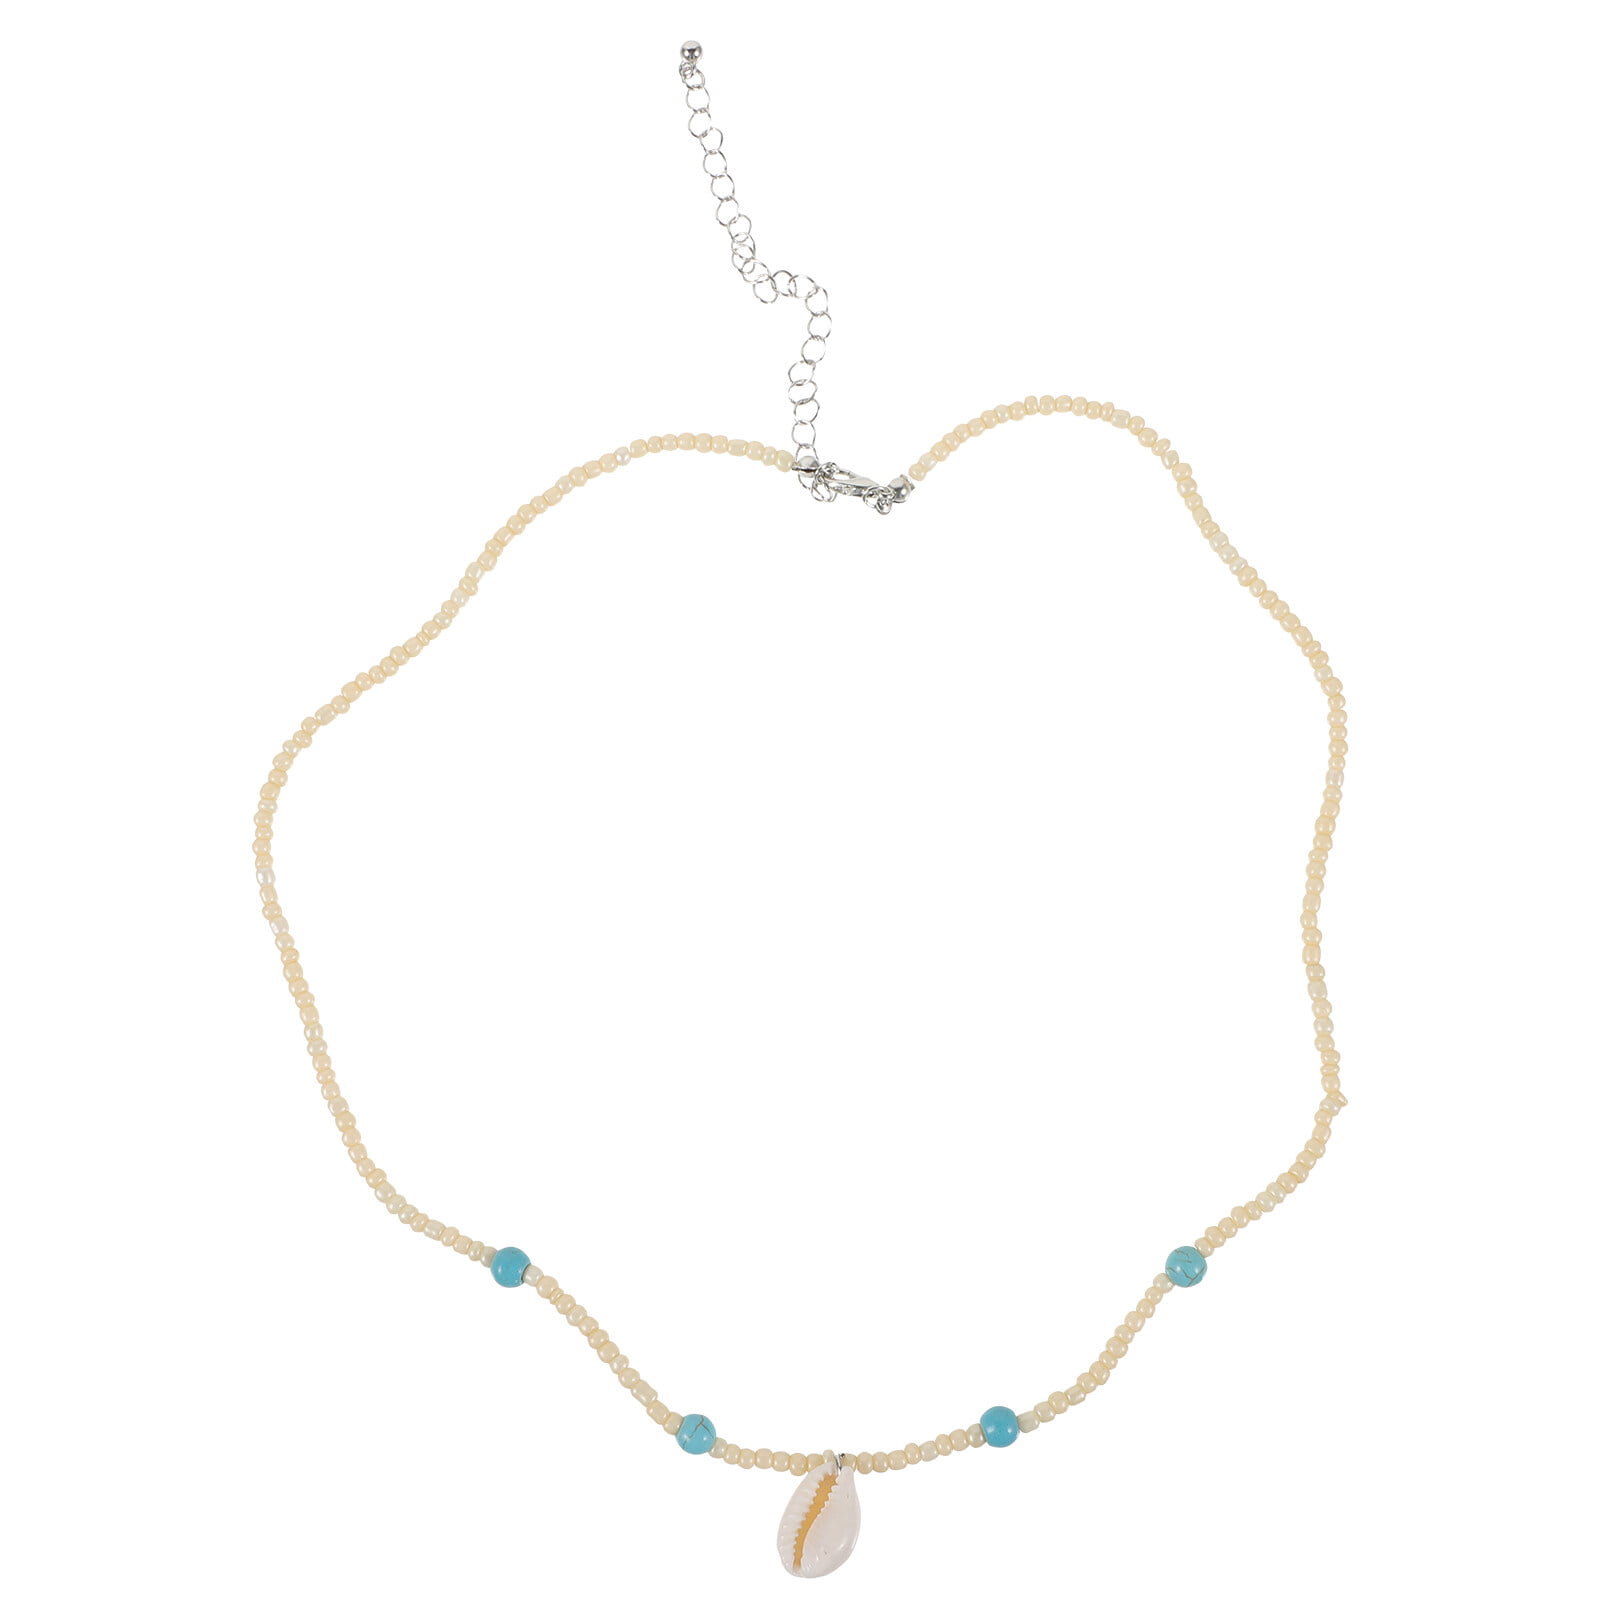 Boho Style Necklaces For Women - Gold Necklaces – Boho Beach Hut